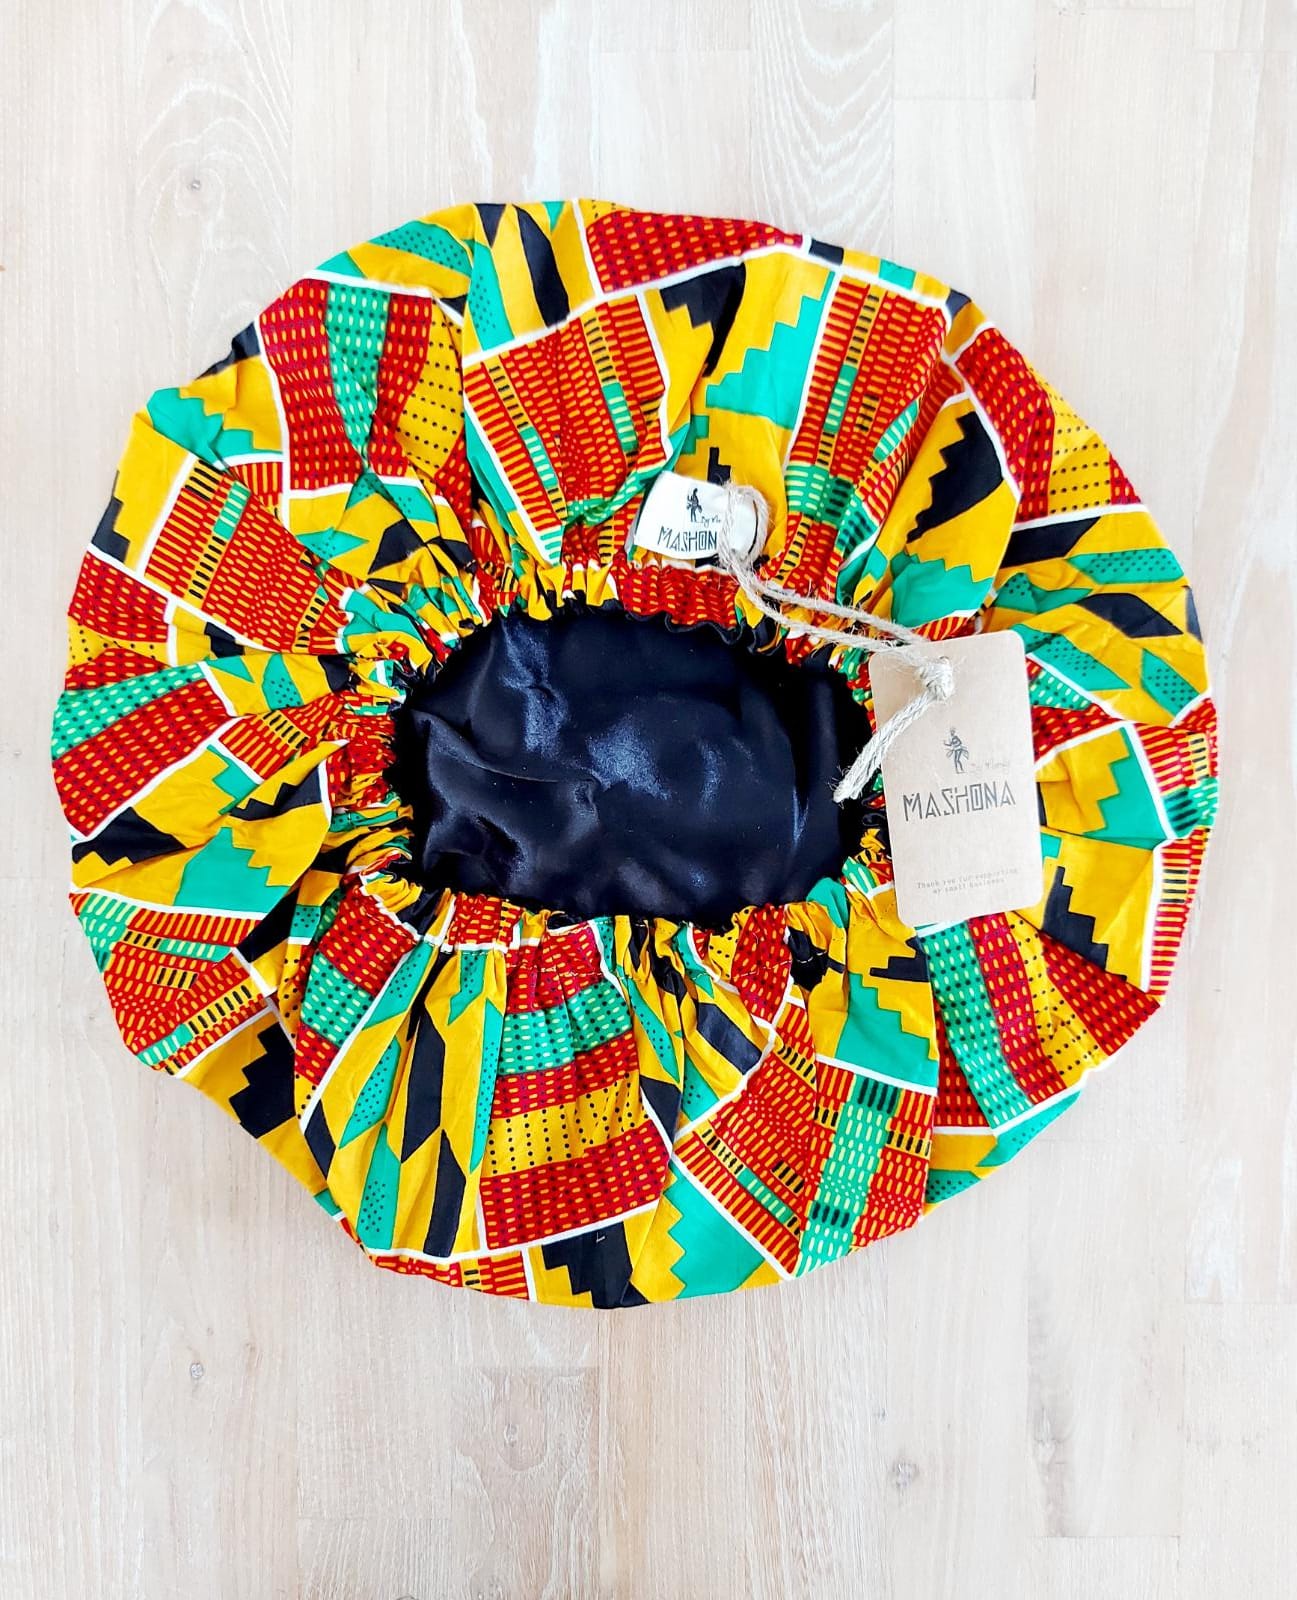 Large African "Mudcloth" Print Women Satin Lined Sleep Bonnet Cap | Sleeping Cap